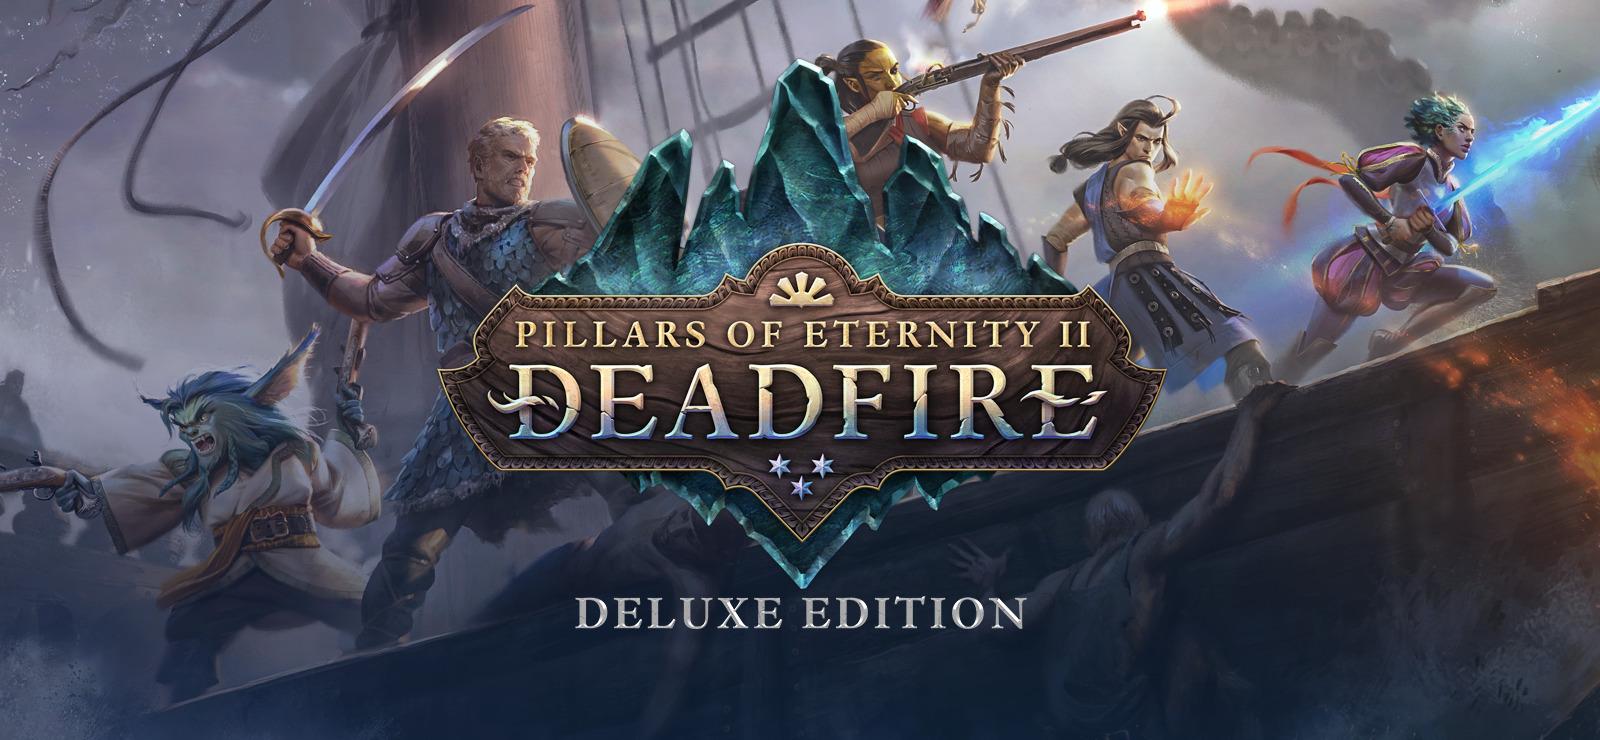 Pillars of Eternity II: Deadfire Edition on GOG.com